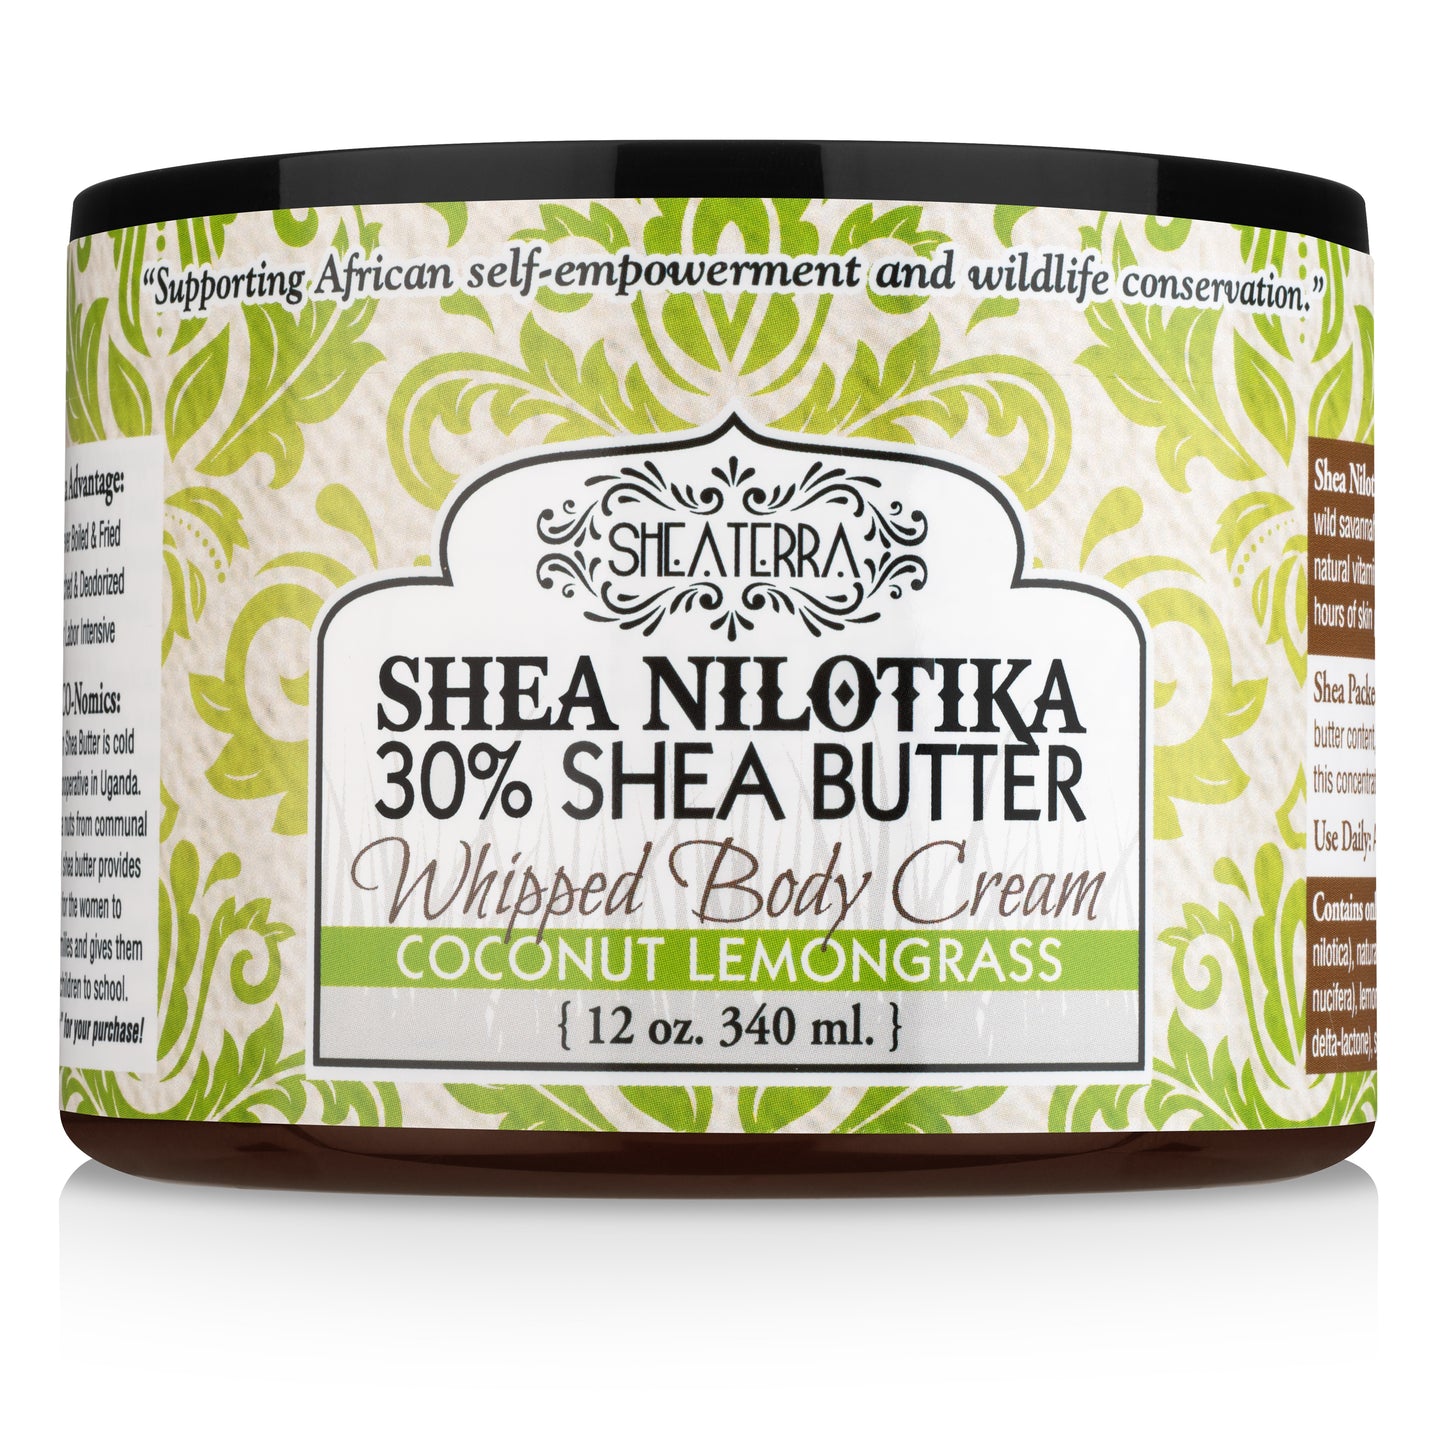 Shea Nilotika 30% Shea Butter whipped Body Cream